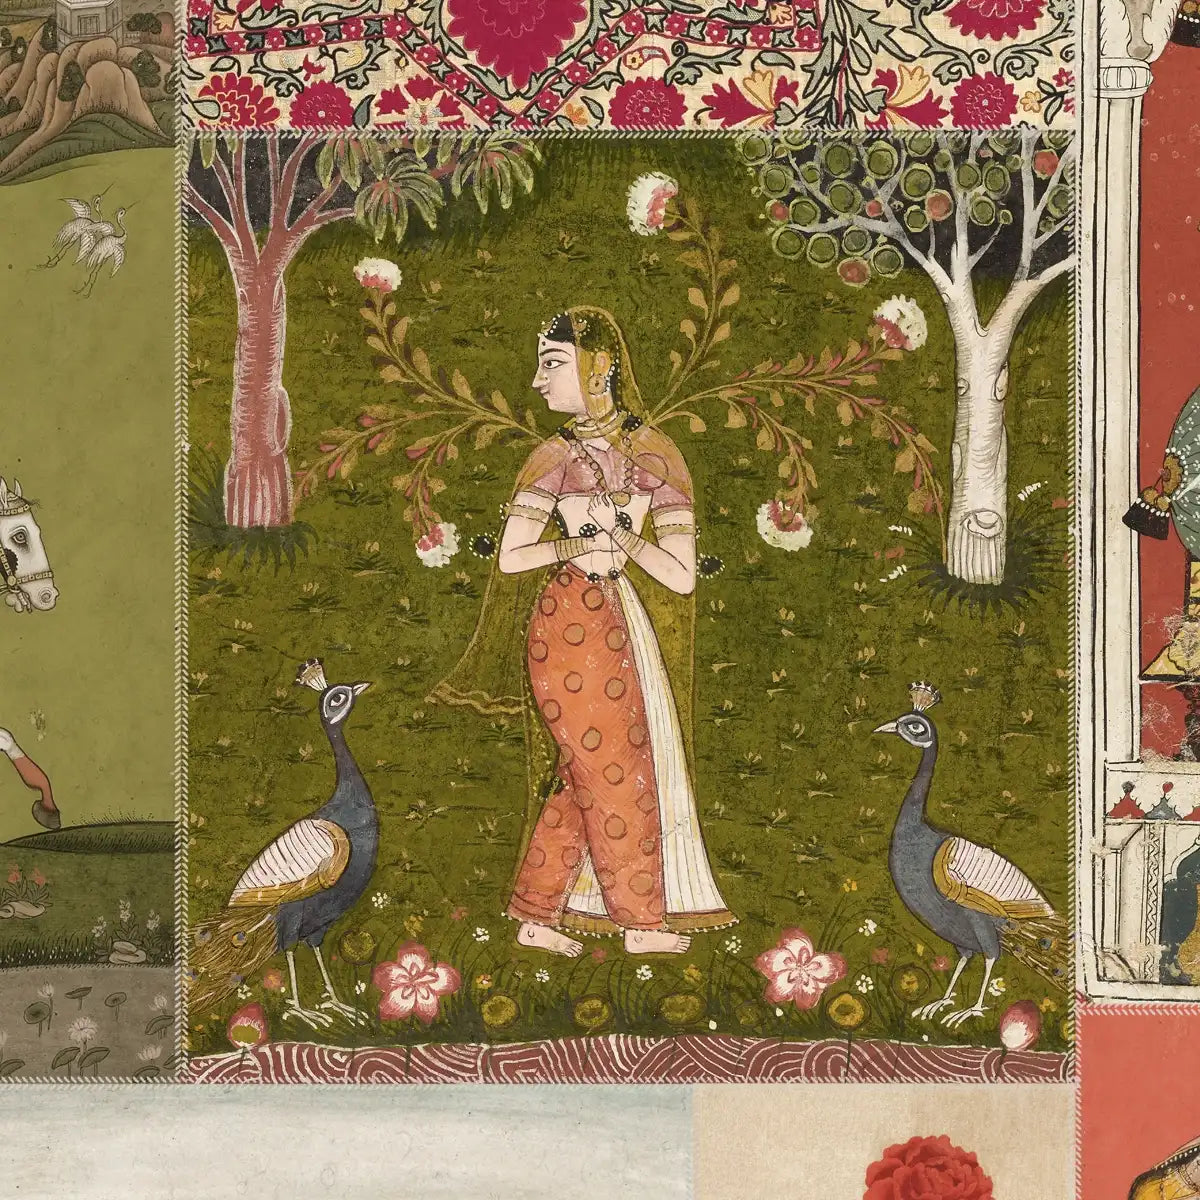 Netri A Vintage Indian Art Inspired Wallpaper